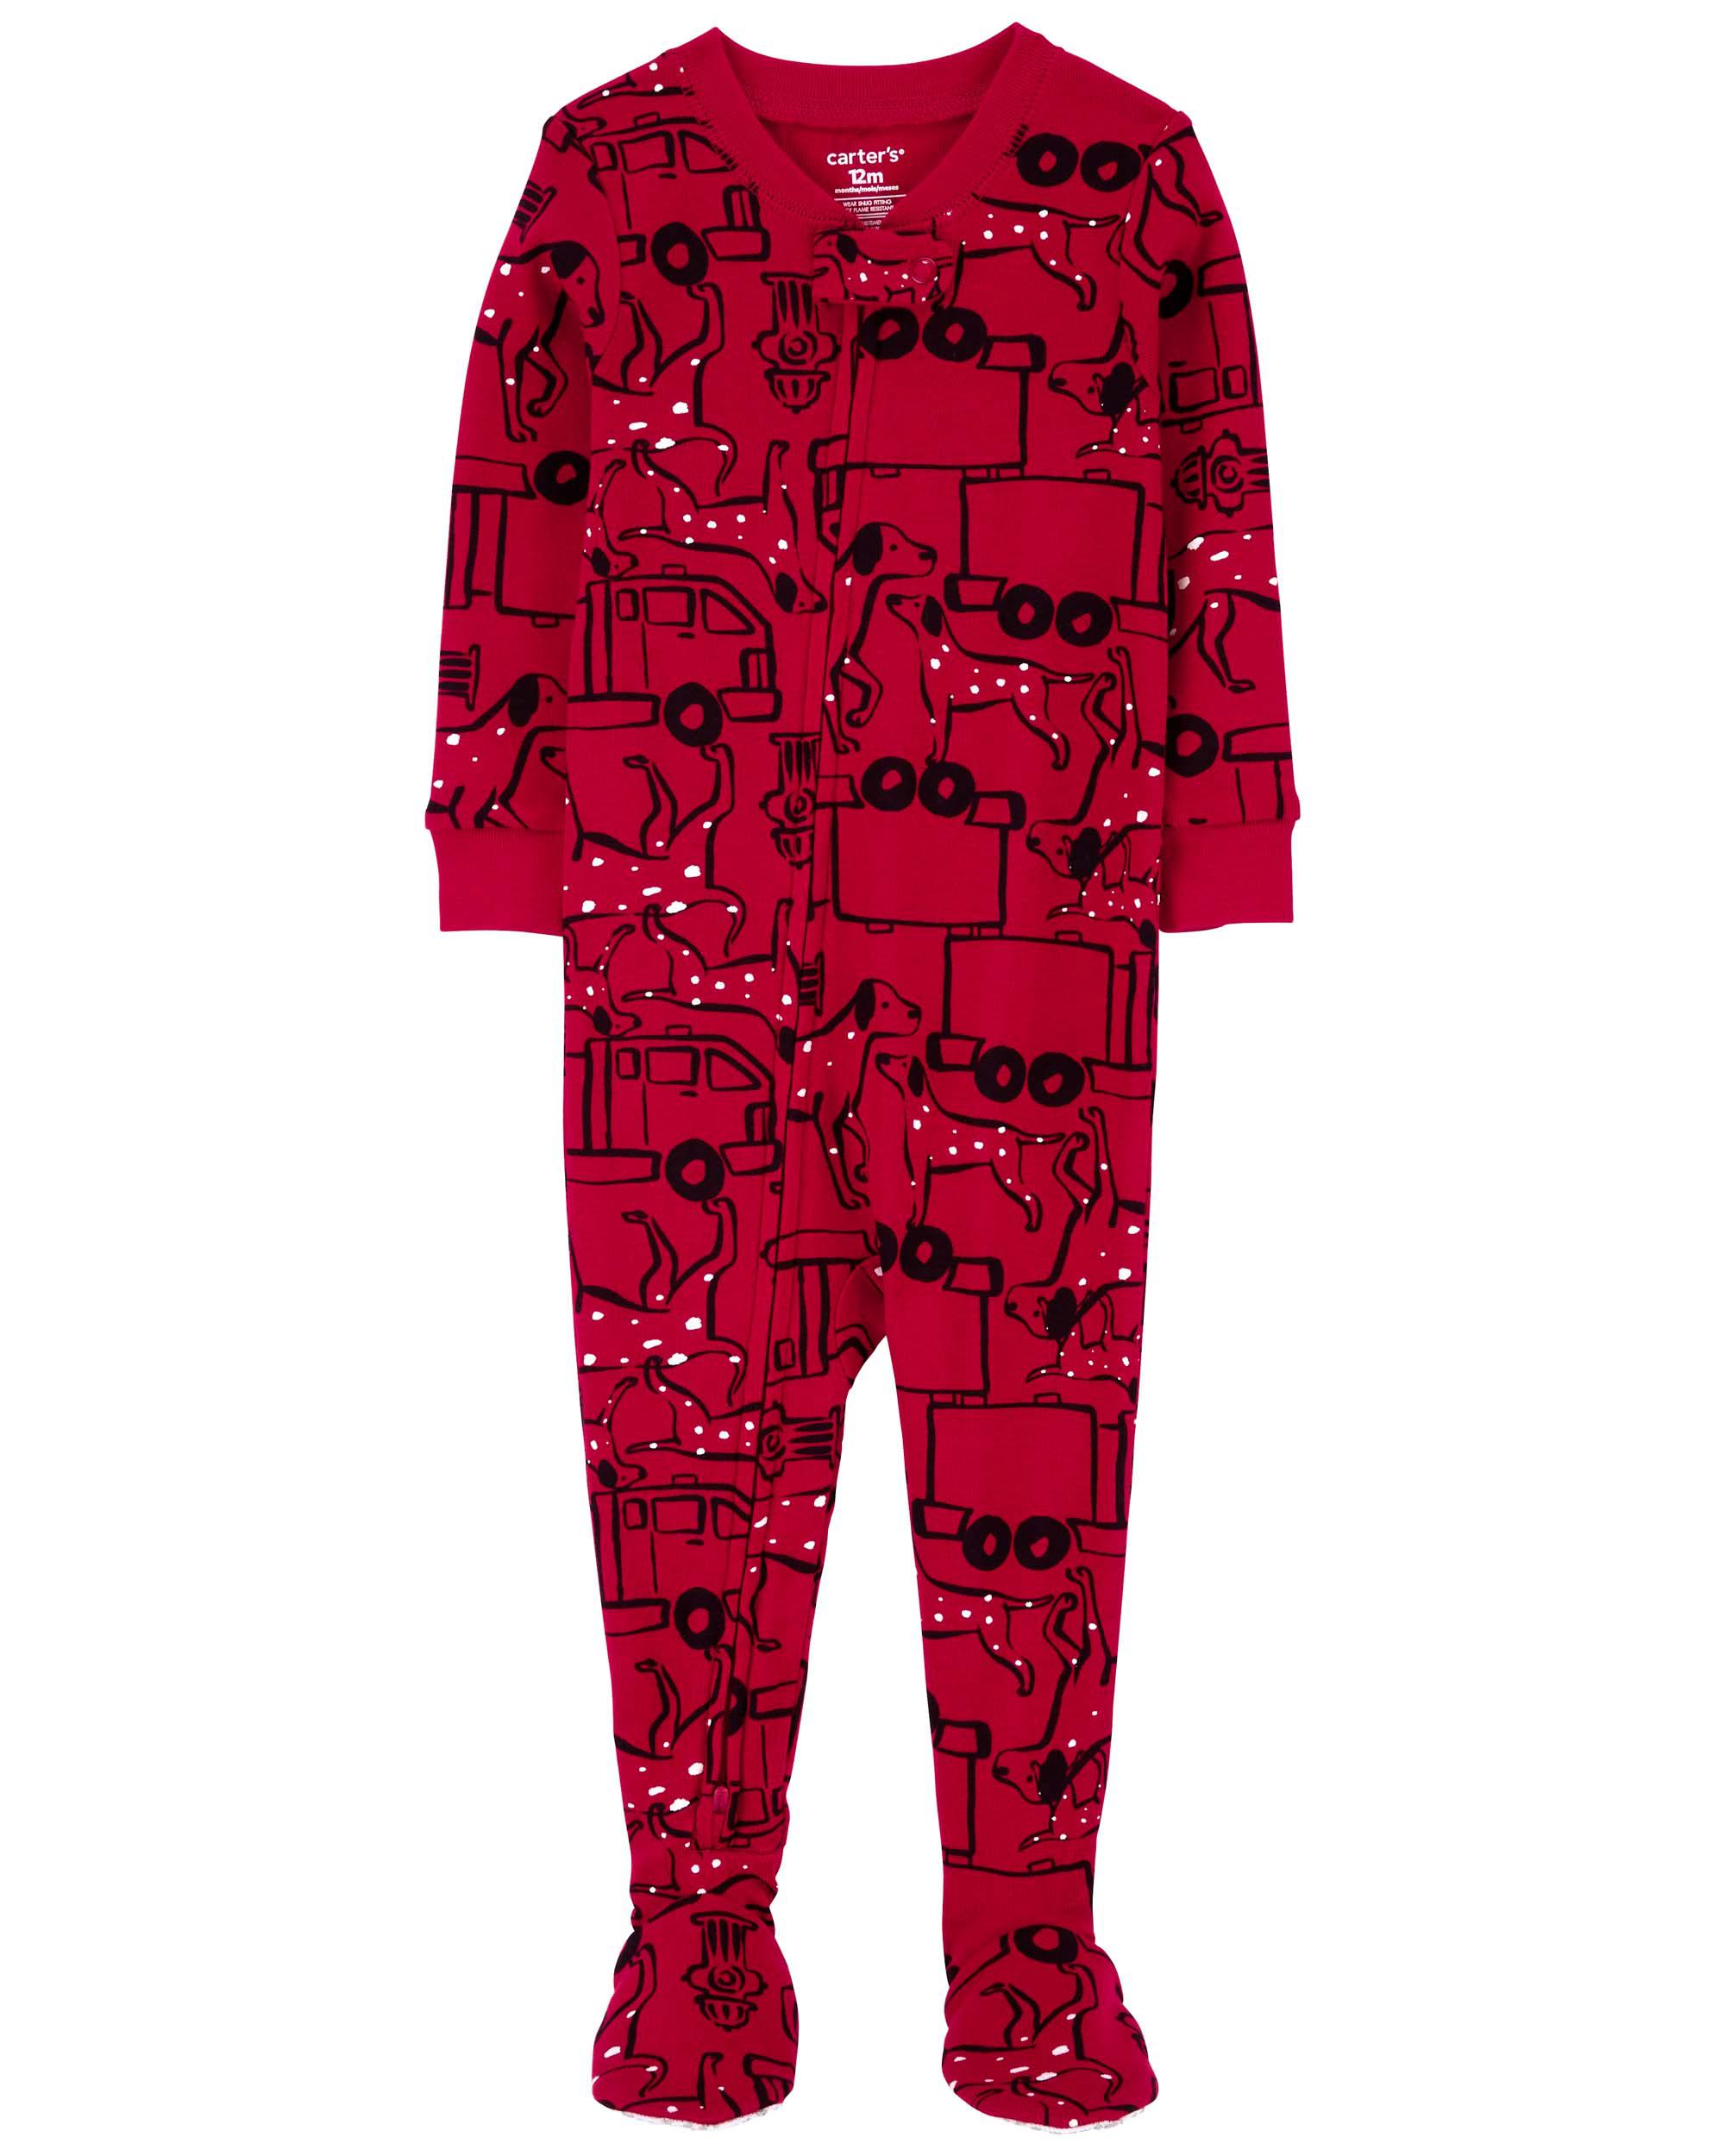 Toddler 1-Piece 100% Snug Fit Cotton Footed Pyjamas